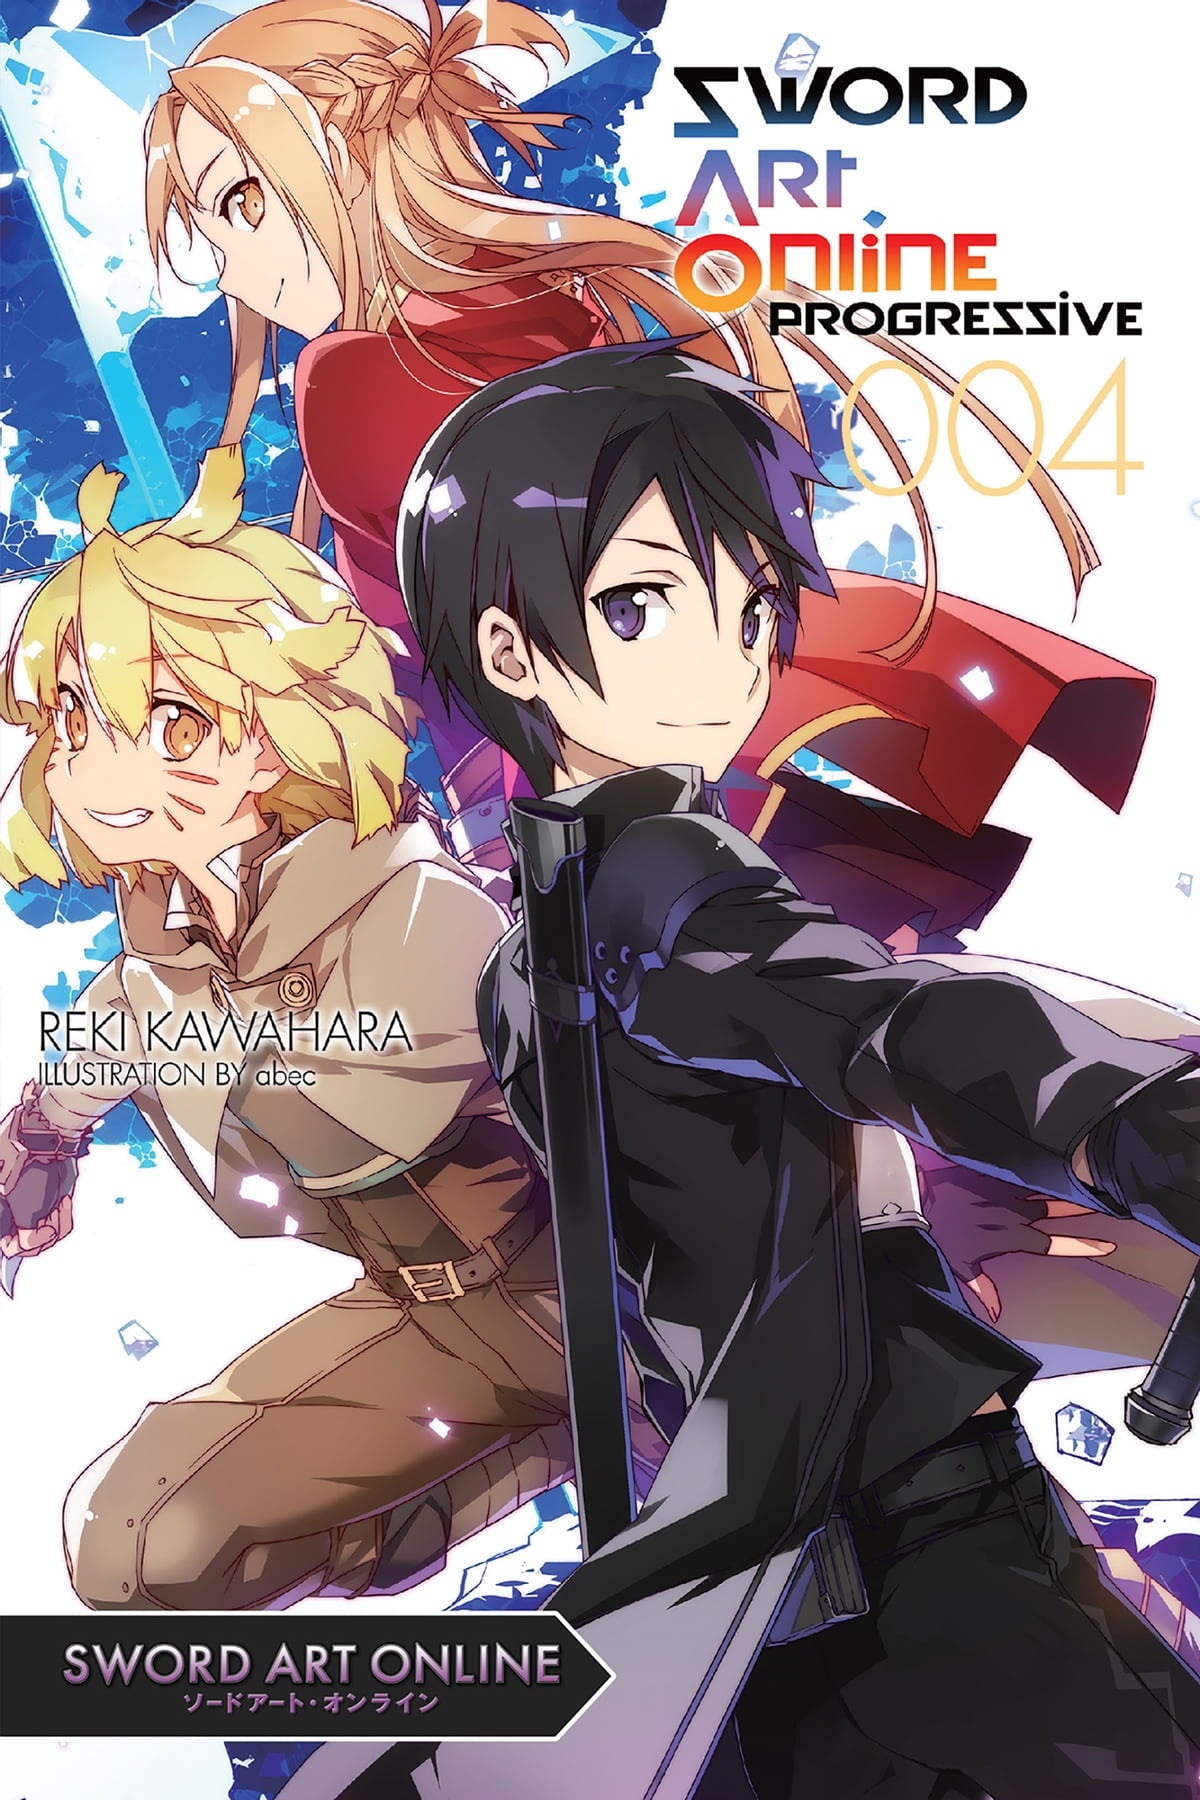 Sword Art Online Progressive Vol. 04 (Light Novel)